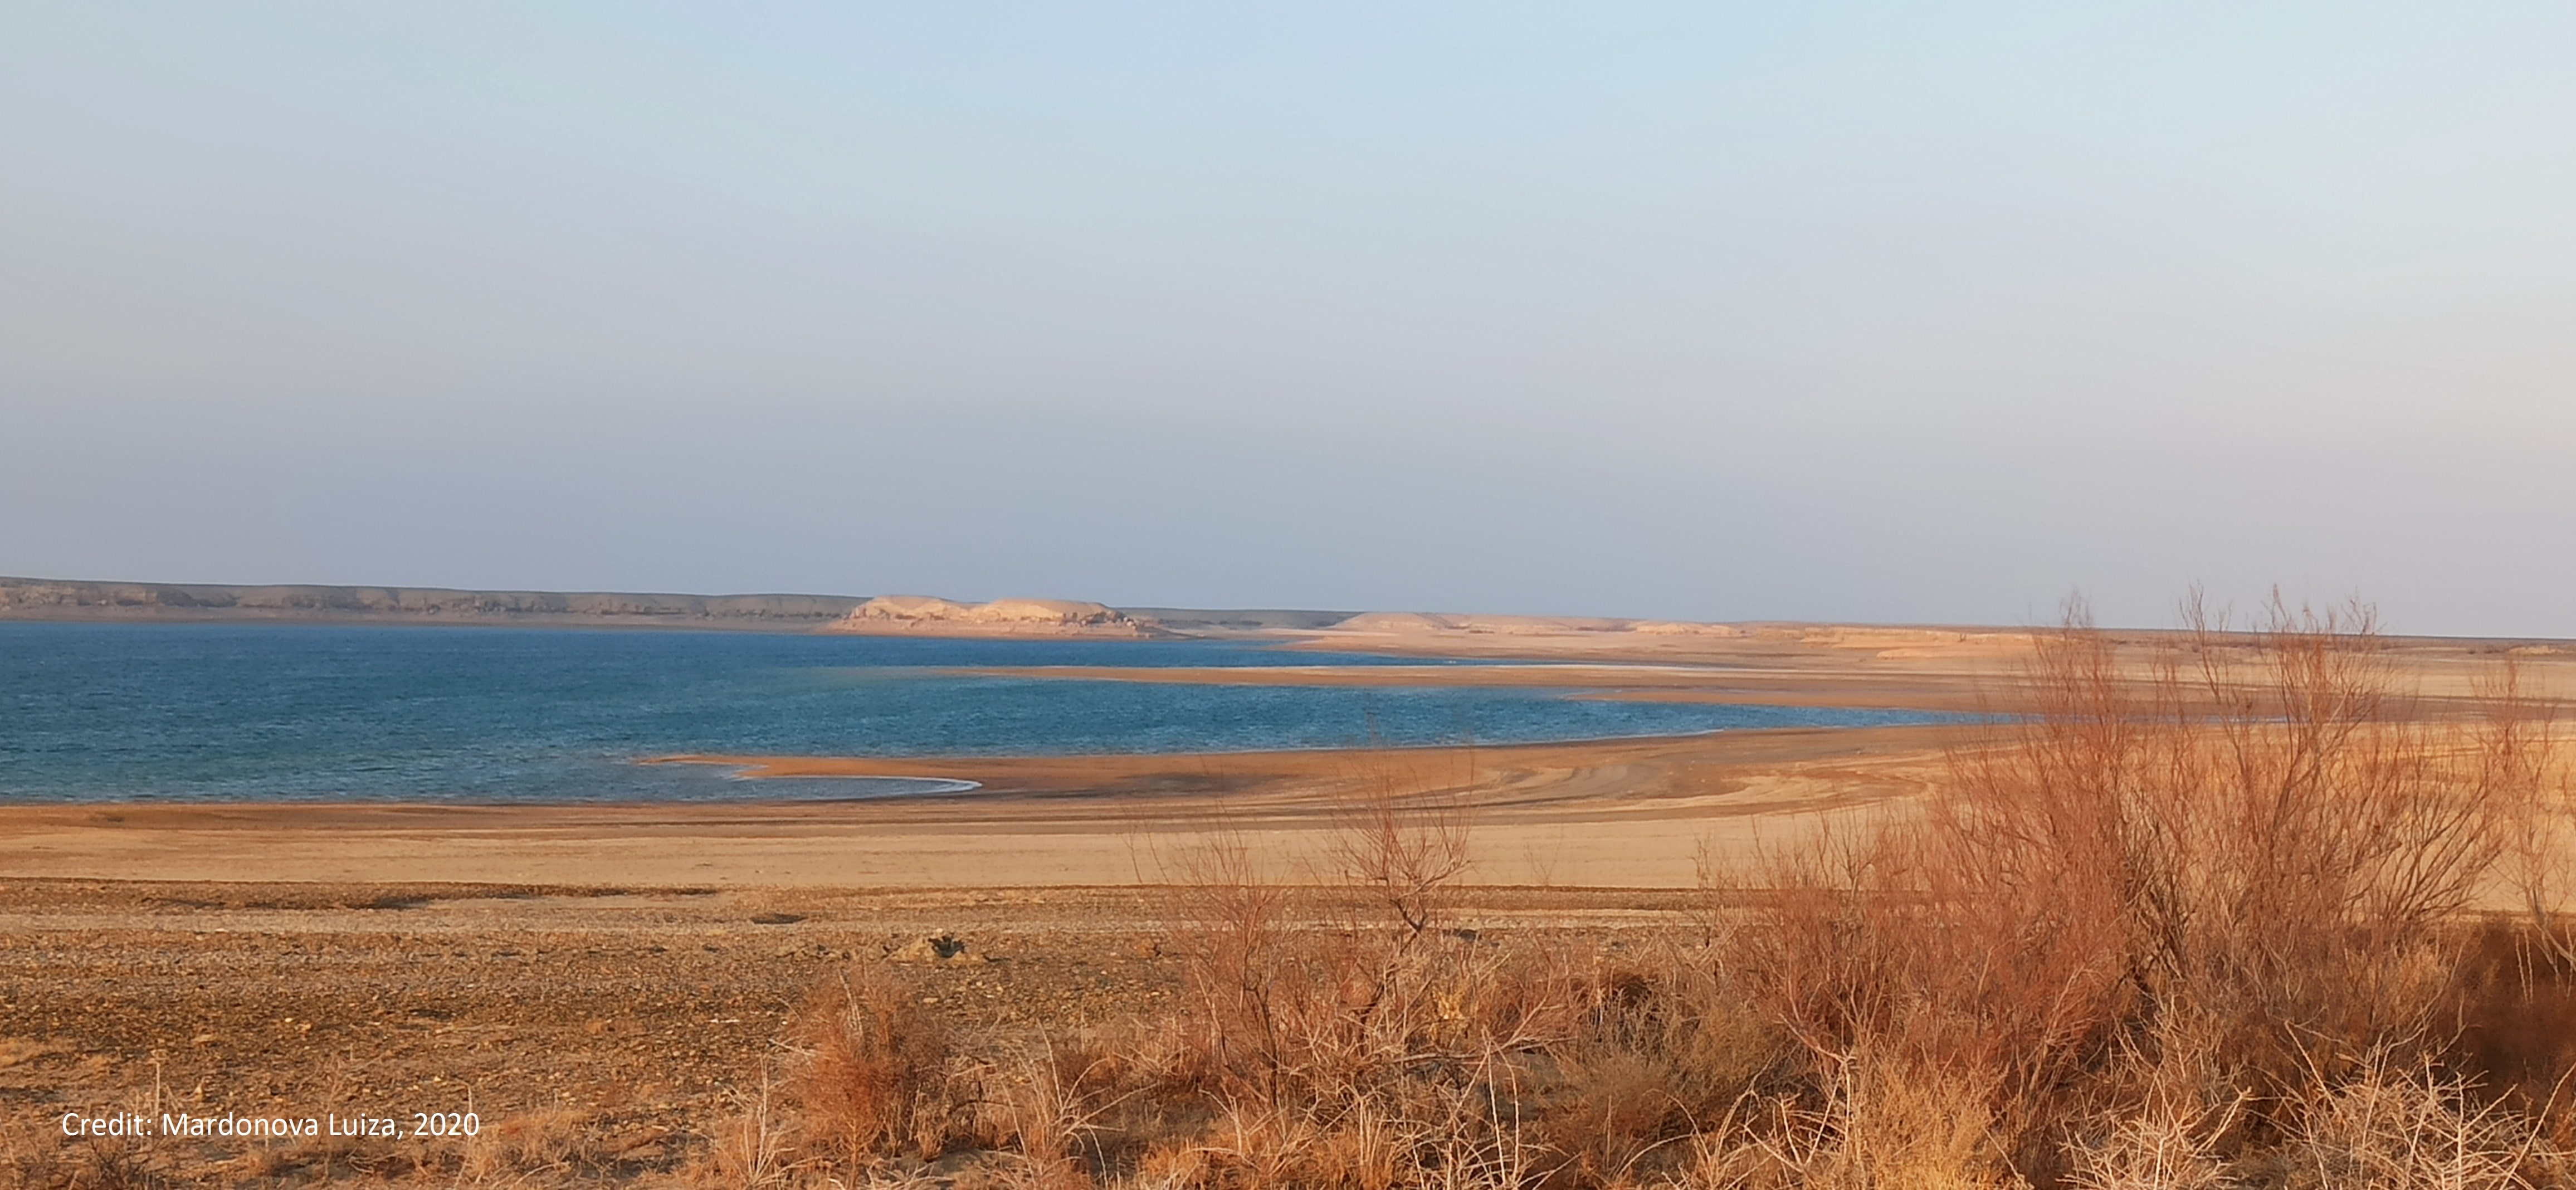 Tudakul and Kuimazar water reservoirs located in Uzbekistan were included in RAMSAR's international wetland conservation list. 